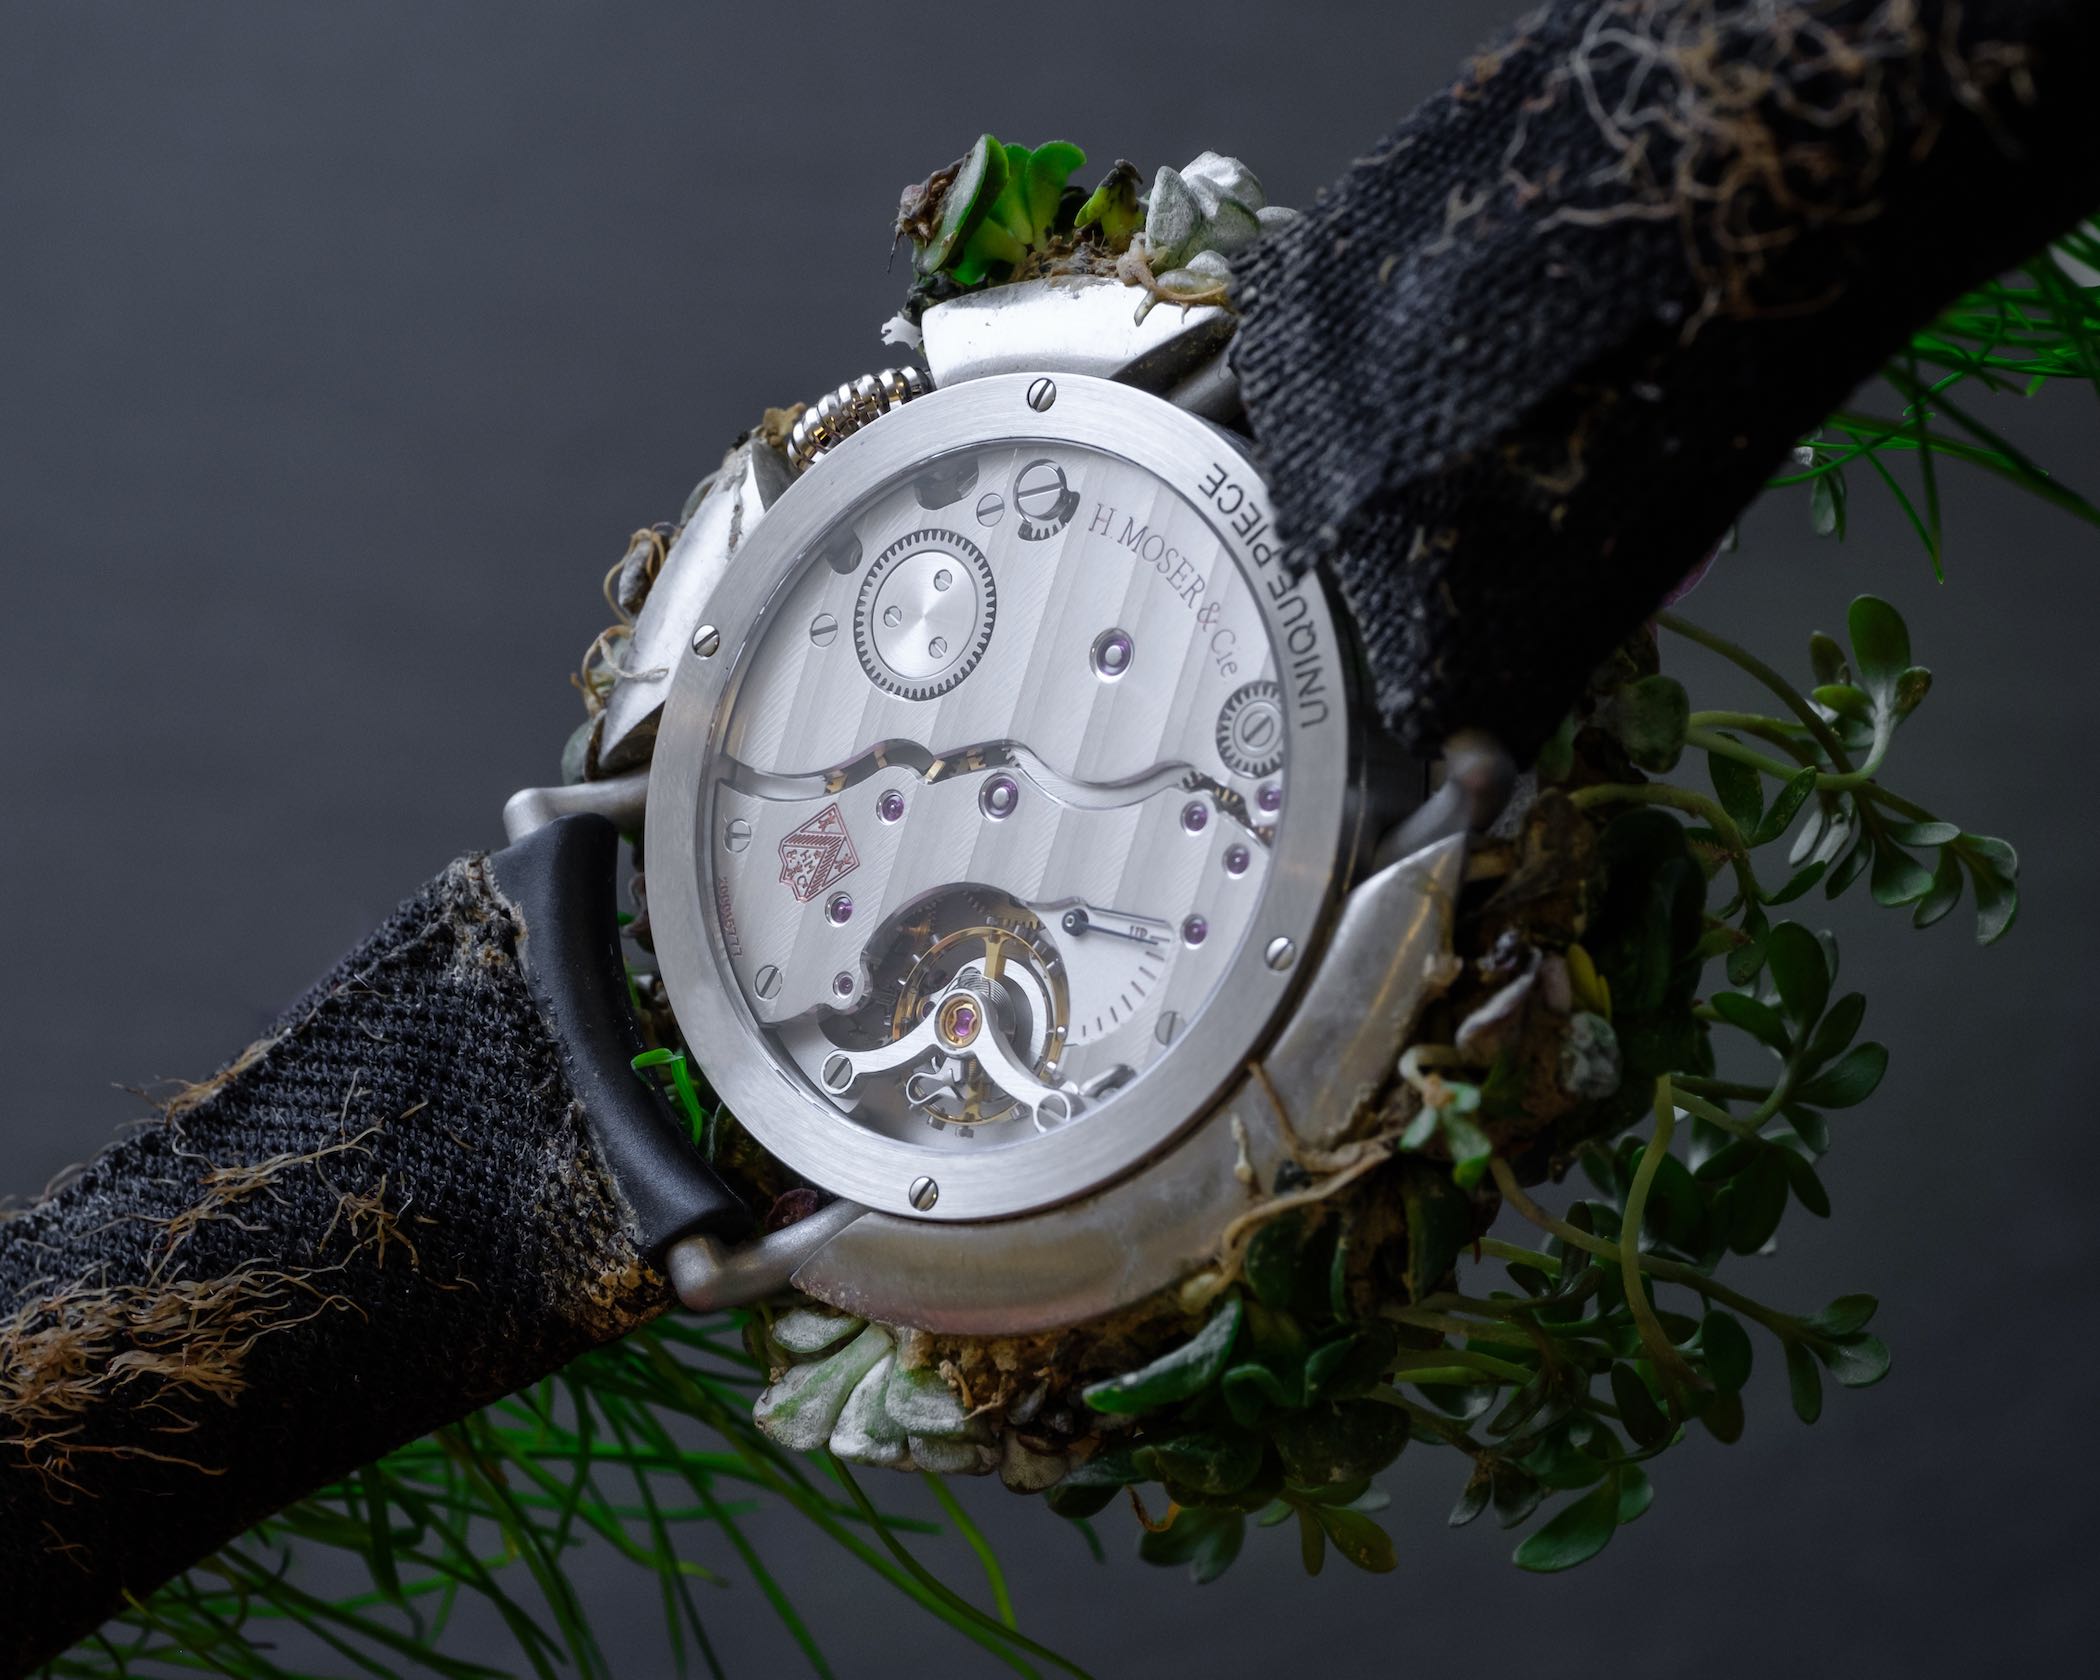 Watch natural. H.Moser - nature watch. H Moser Cie часы. H Moser Cie мануфактура. Watch from h. Moser.